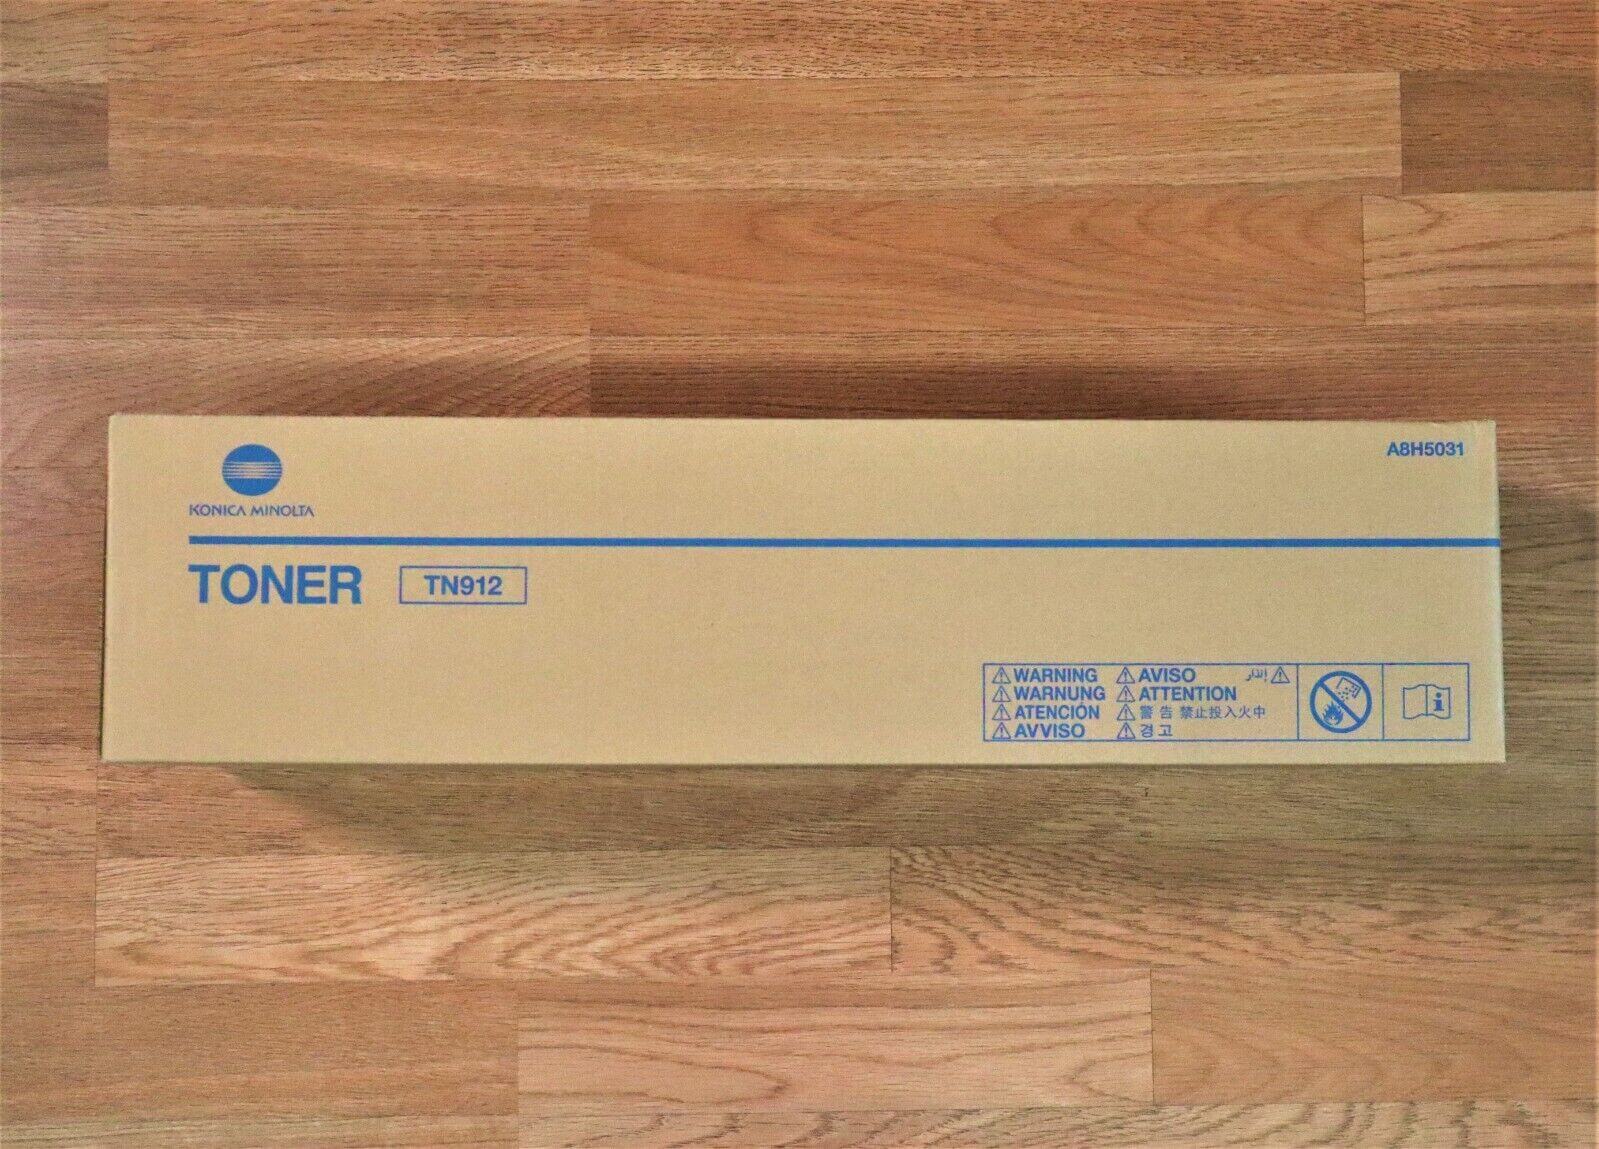 Genuine Konica Minolta TN912 Toner A8H5031 For Bizhub 958 Same Day Shipping!!! - copier-clearance-center